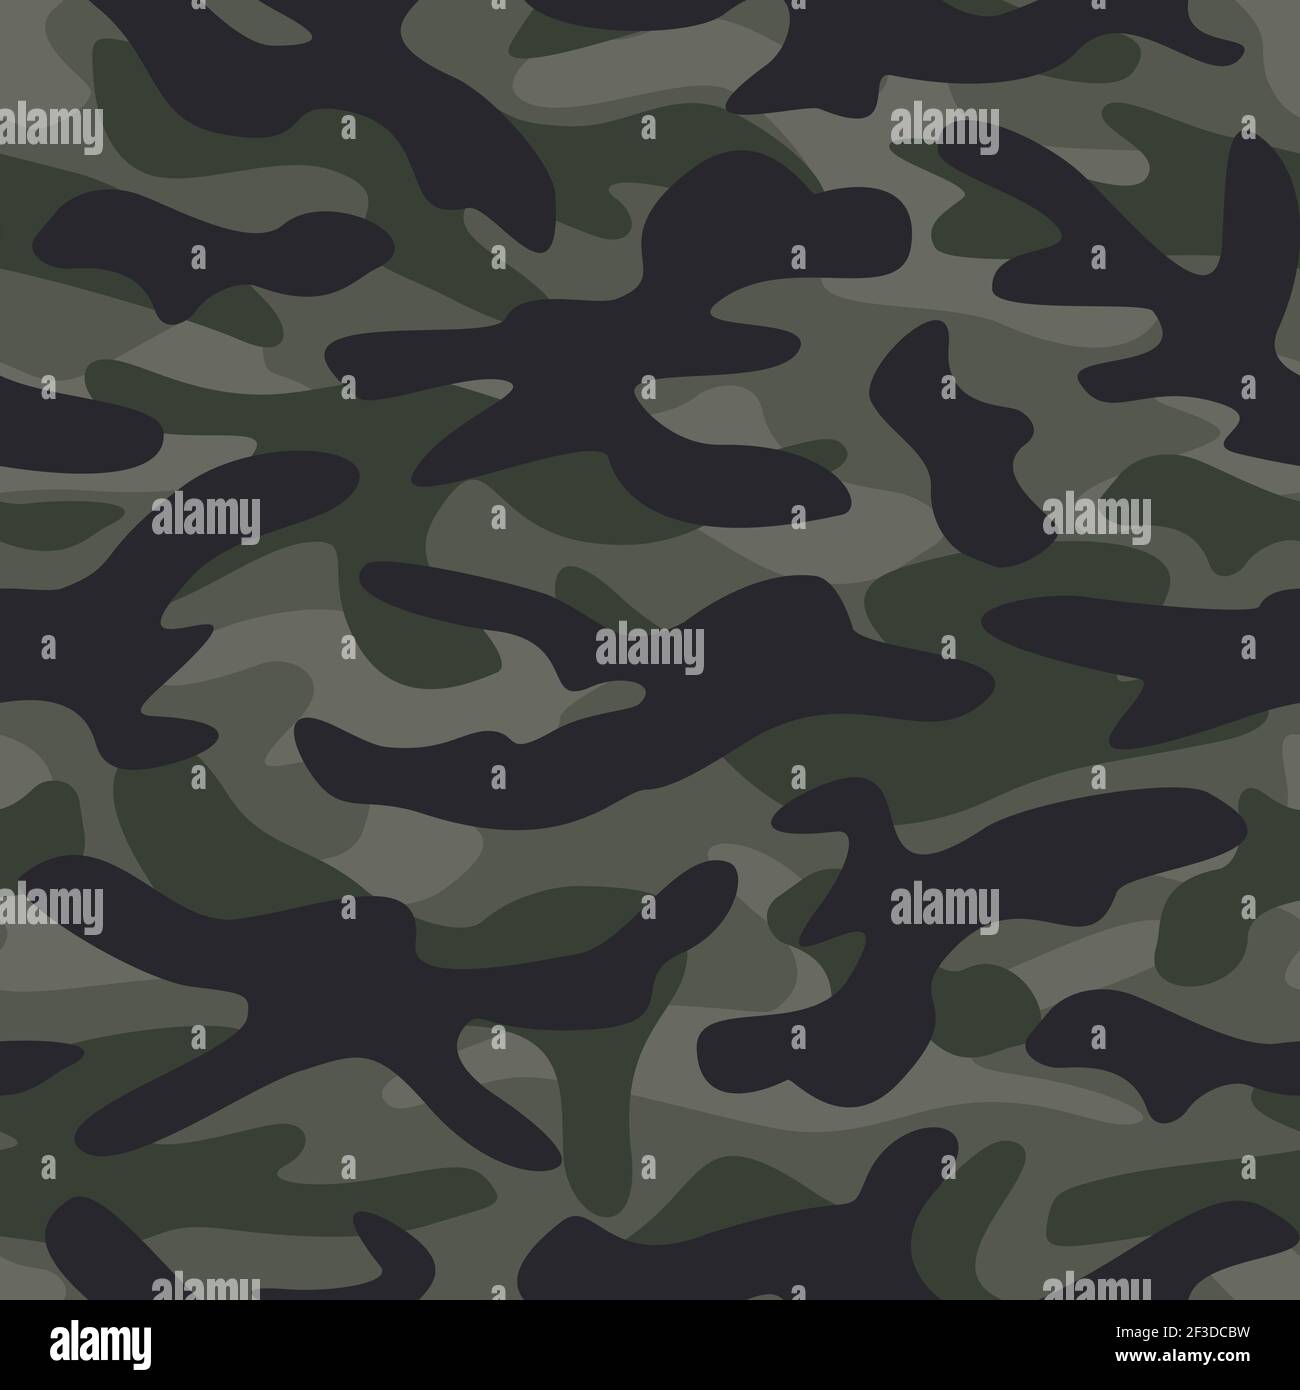 Khaki Camouflage Vektor Nahtloses Muster Illustration. Camo Print für Mode Textil-Design. Stock Vektor